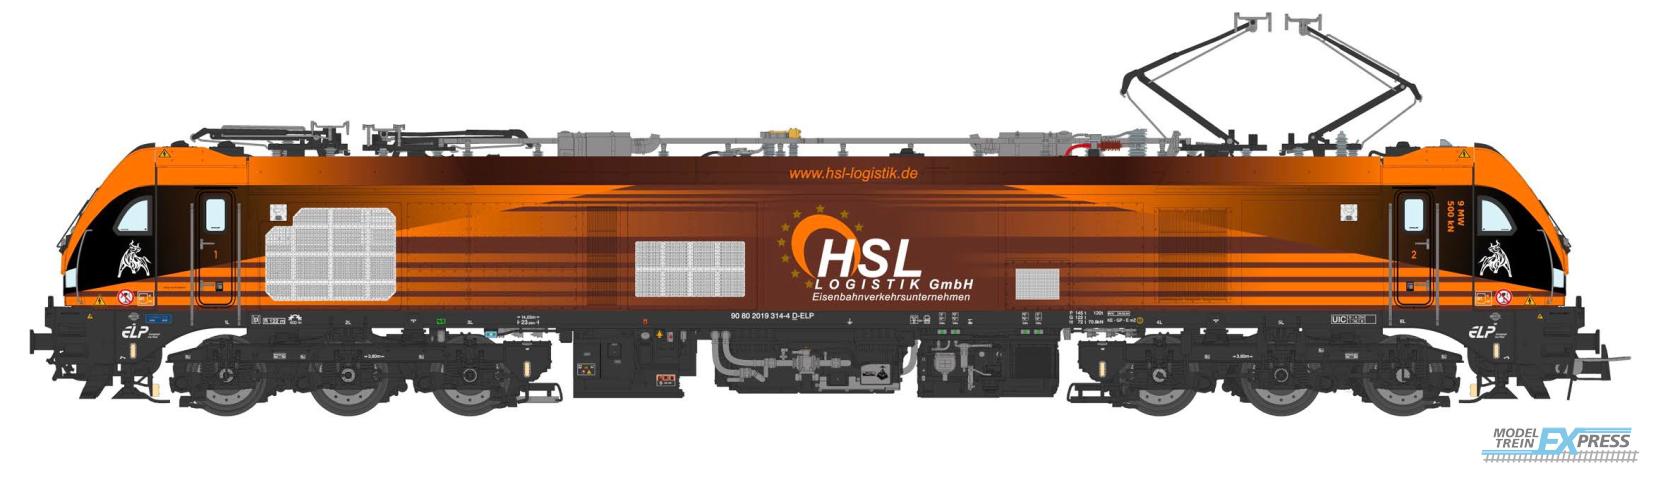 Sudexpress S0193140 Euro 9000 locomotive 2019 314-4 HSL Logistics GmbH, DCC Sound + Servos (Pantos)